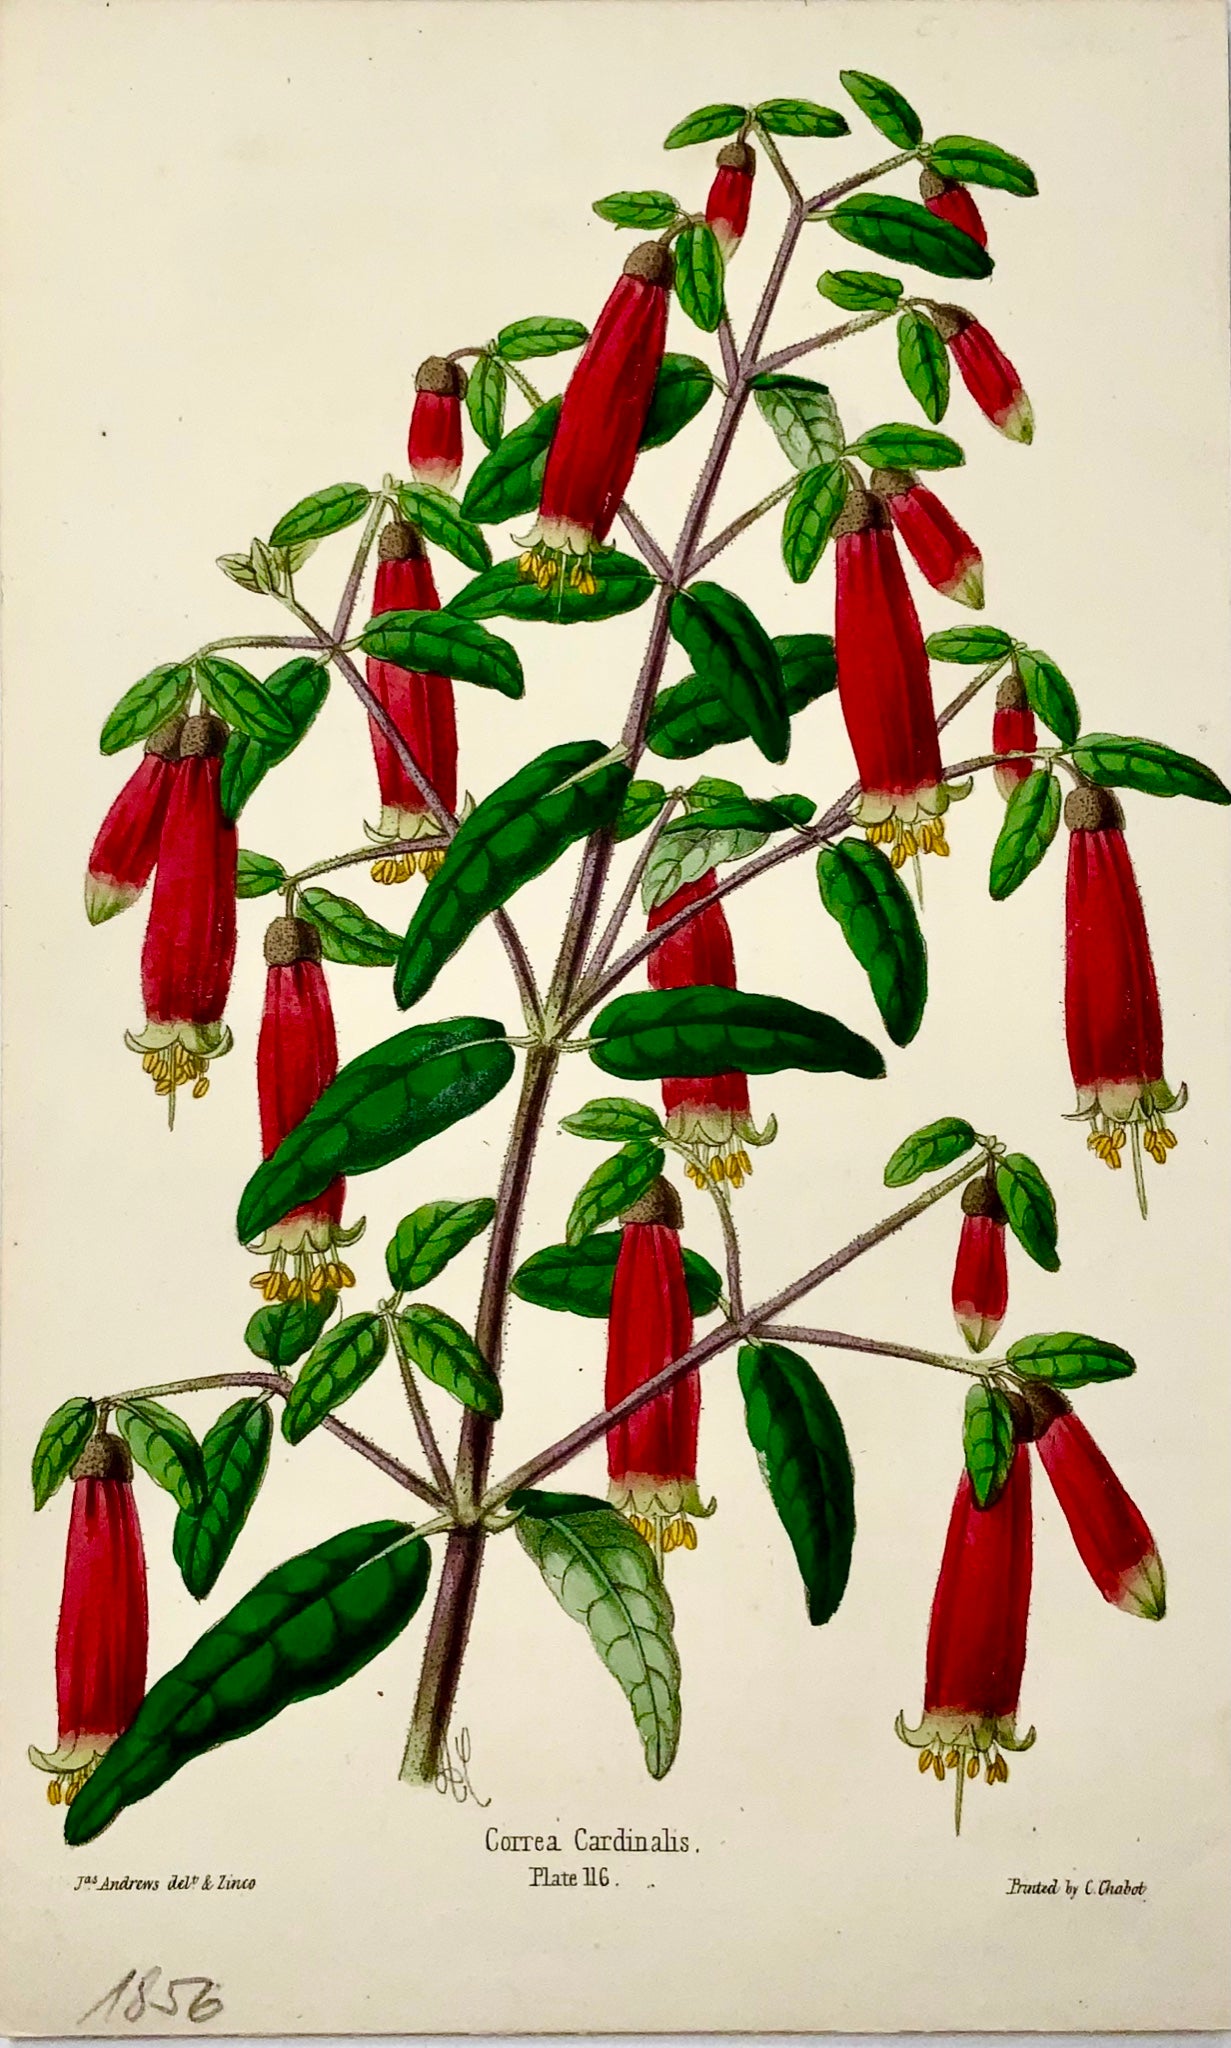 1856 Correa Cardinalis, James Andrews, squisito colore a mano, botanica